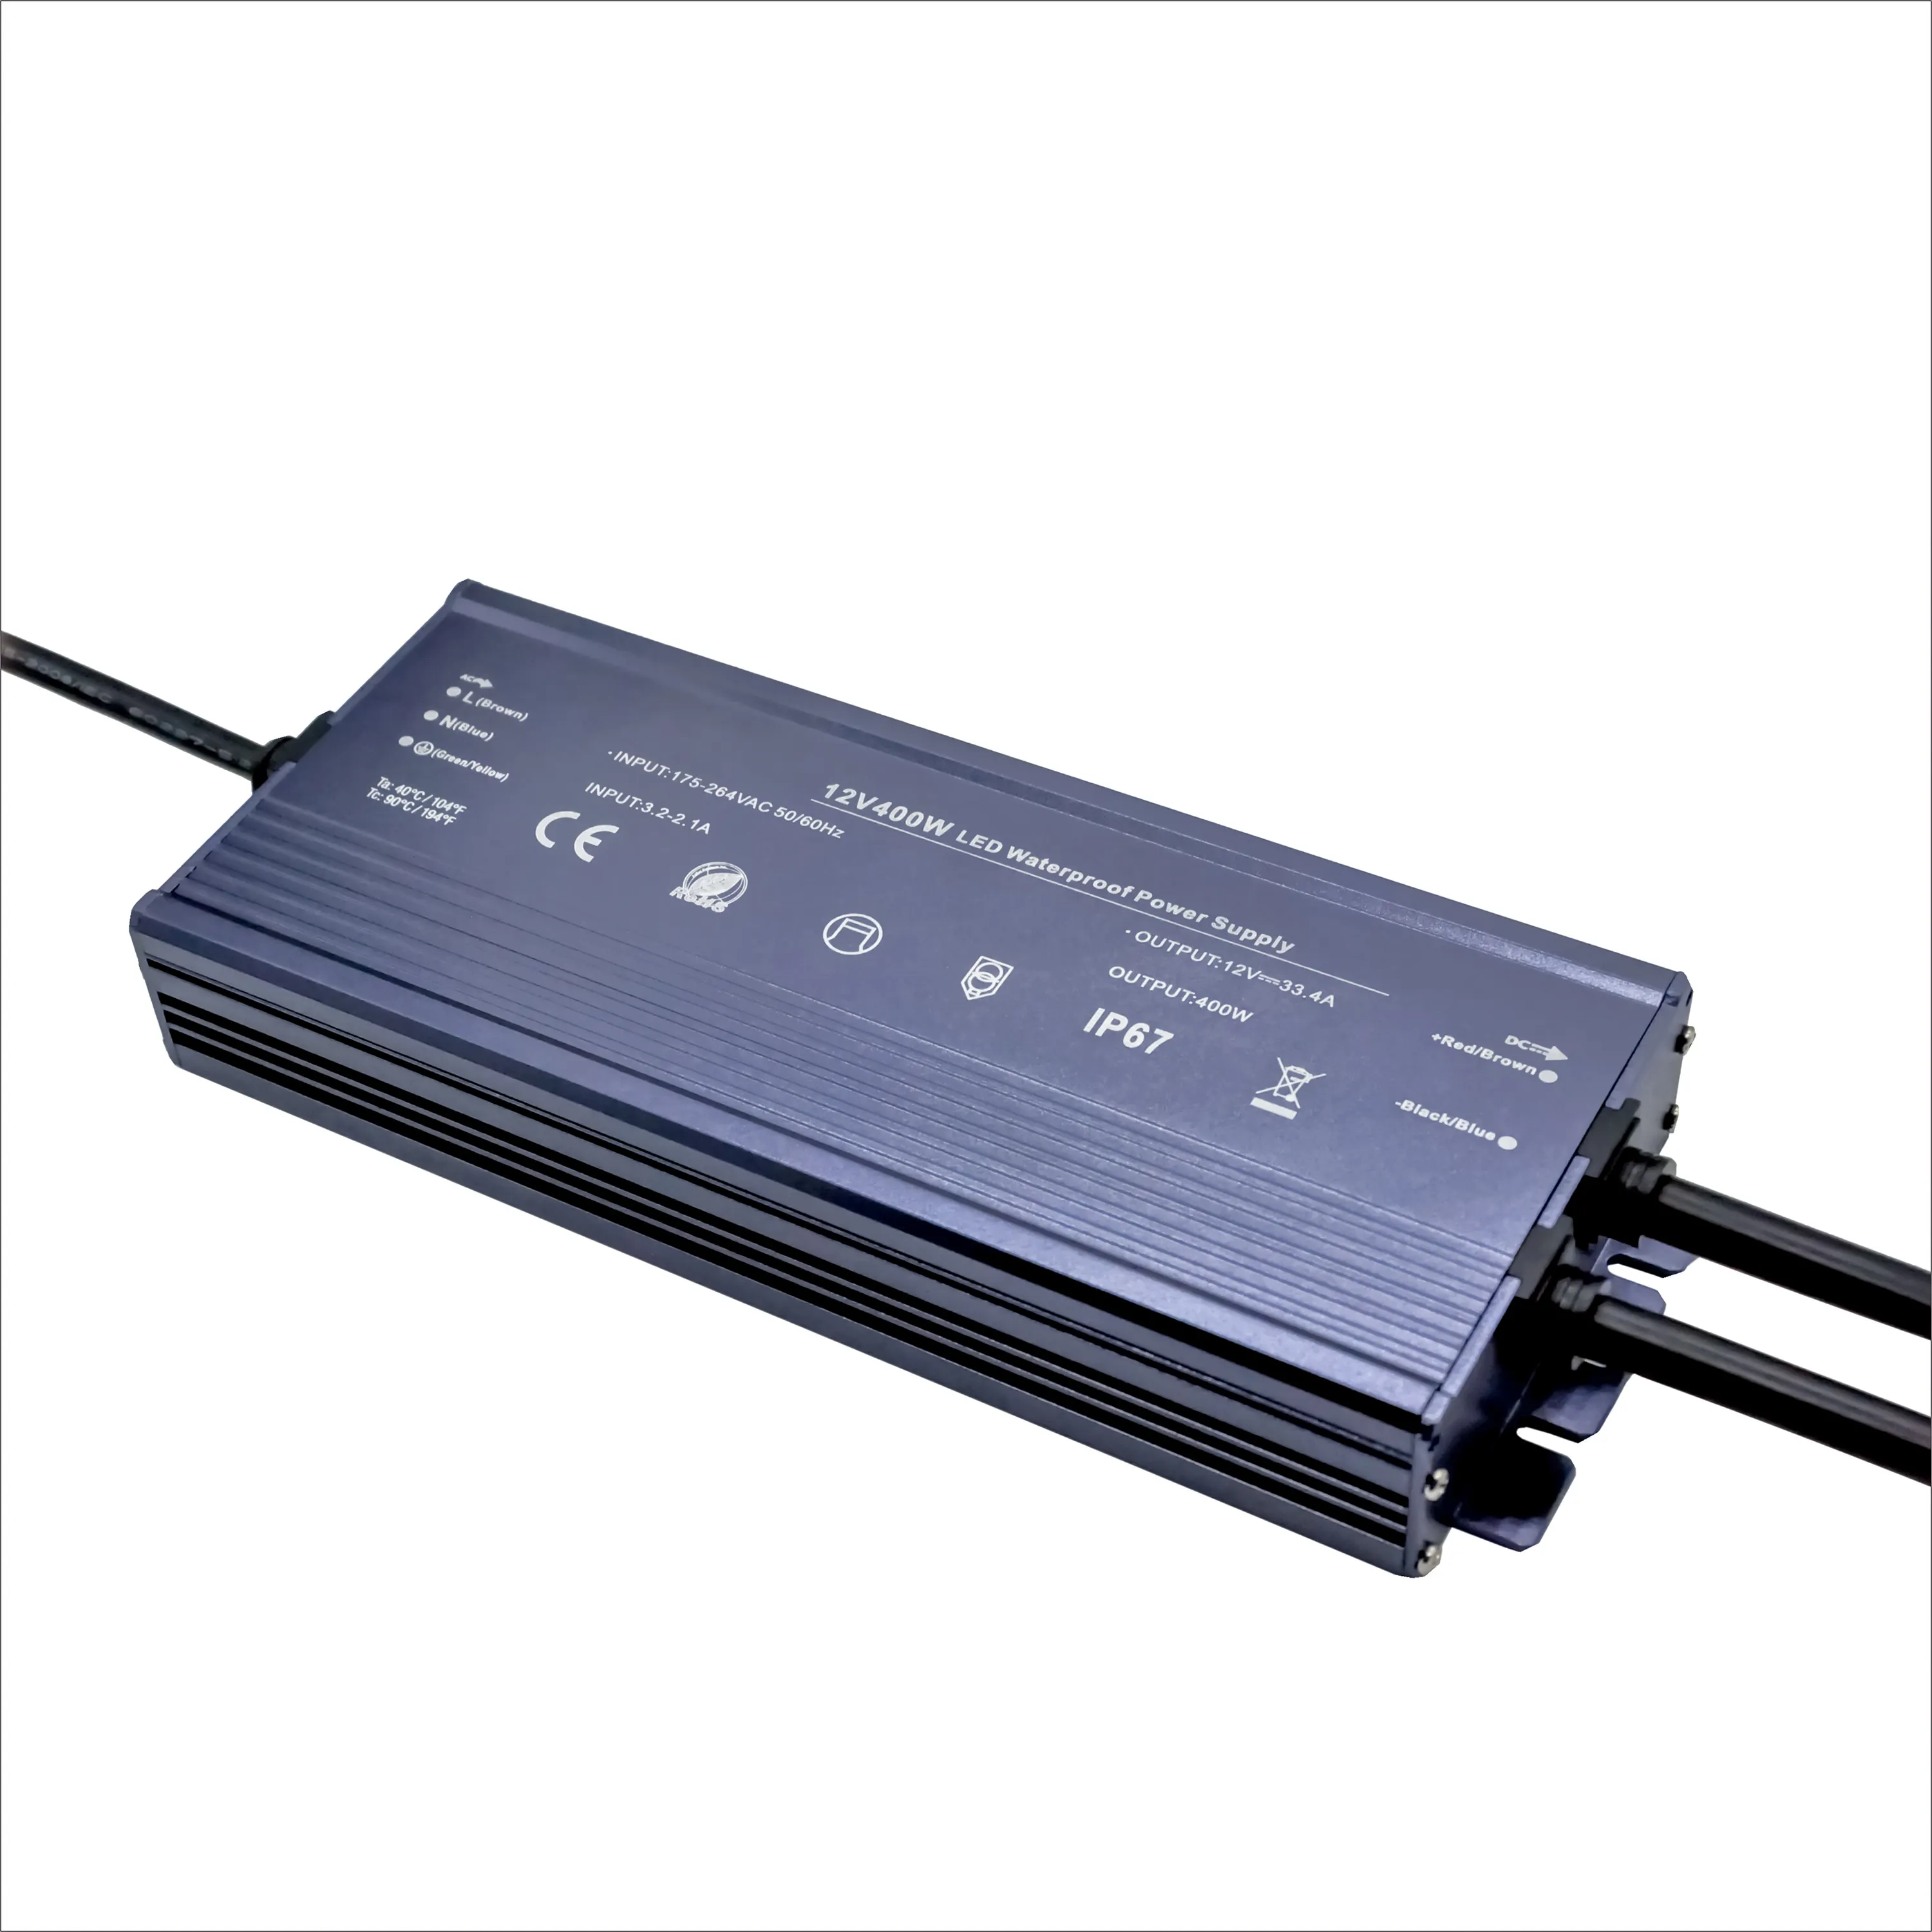 Wechselstrom zu Gleichstrom 110V 220V Smps LED-Netzteil Gpd-Rxd-Nl24-120 Mw-Treiber 130V Variable Dimmer Switch Mode Netzteil